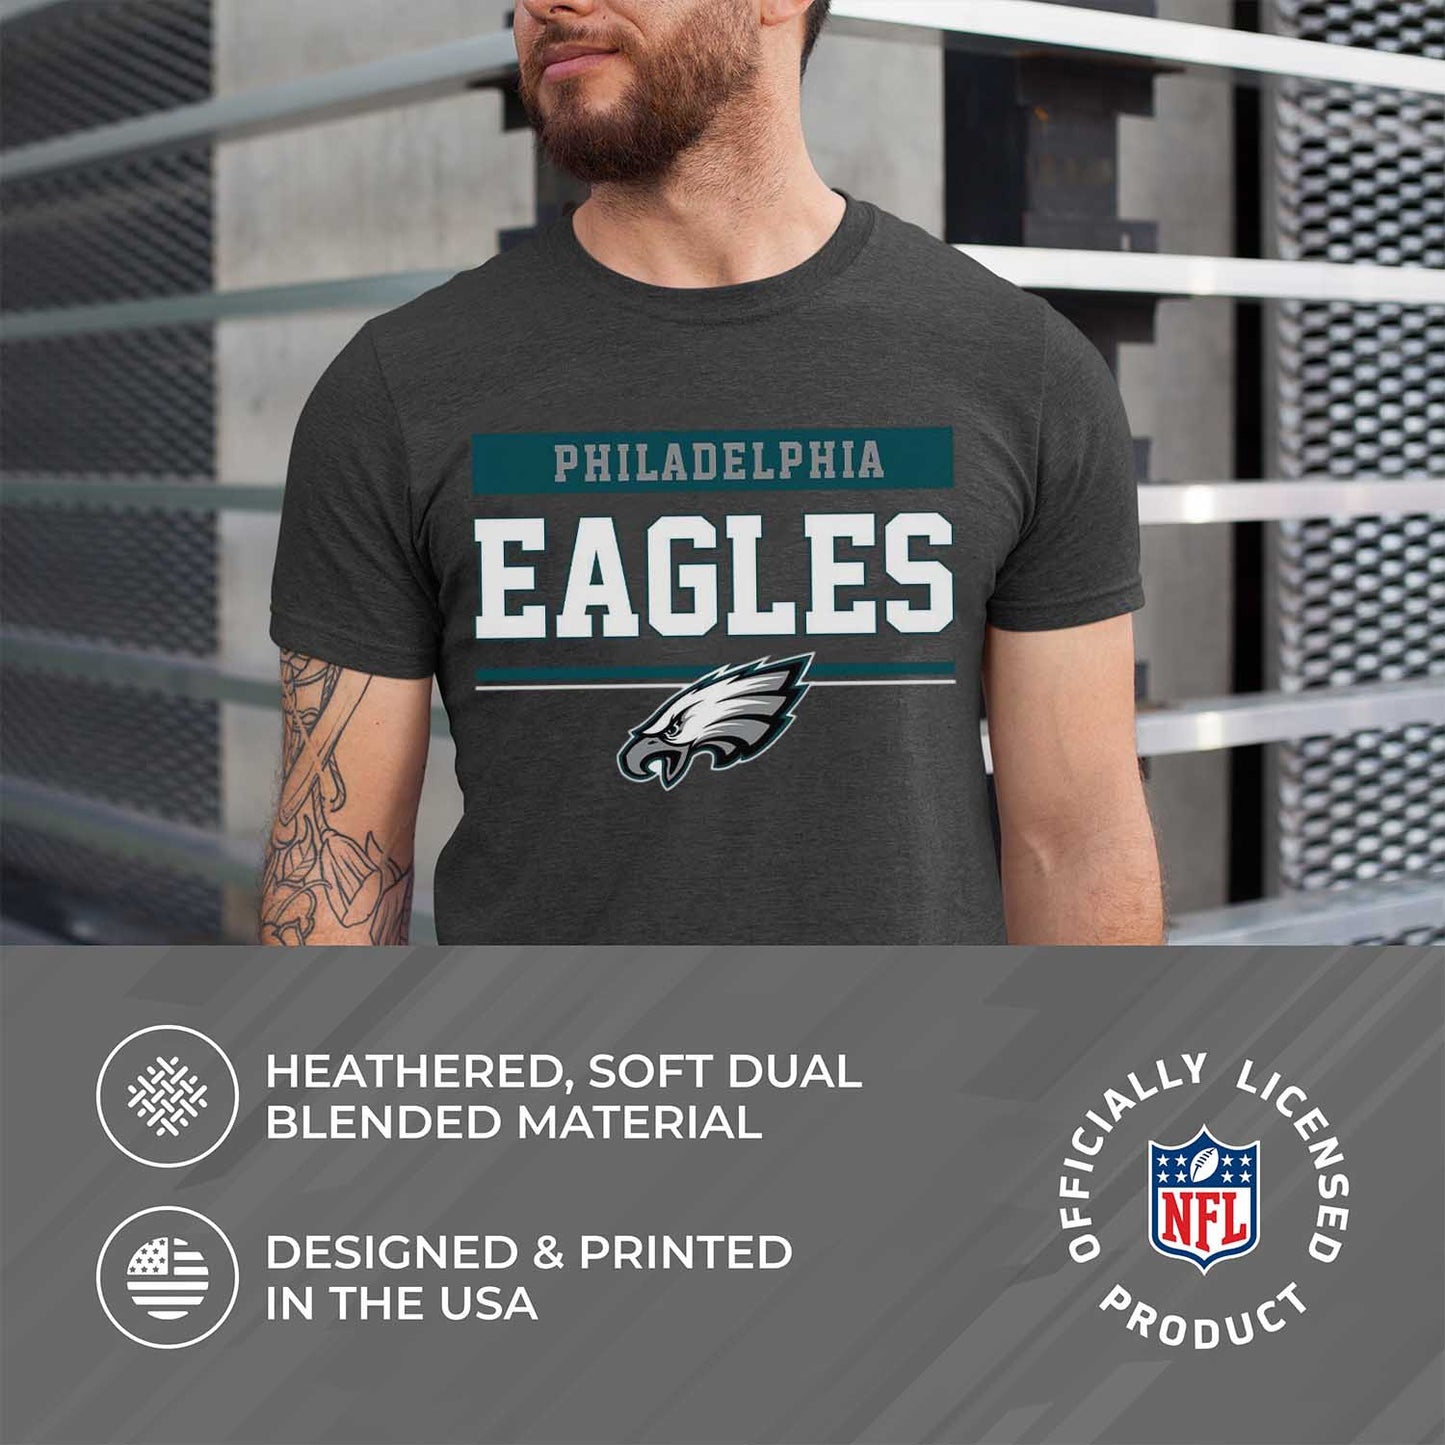 Philadelphia Eagles NFL Adult Team Block Tagless T-Shirt - Charcoal